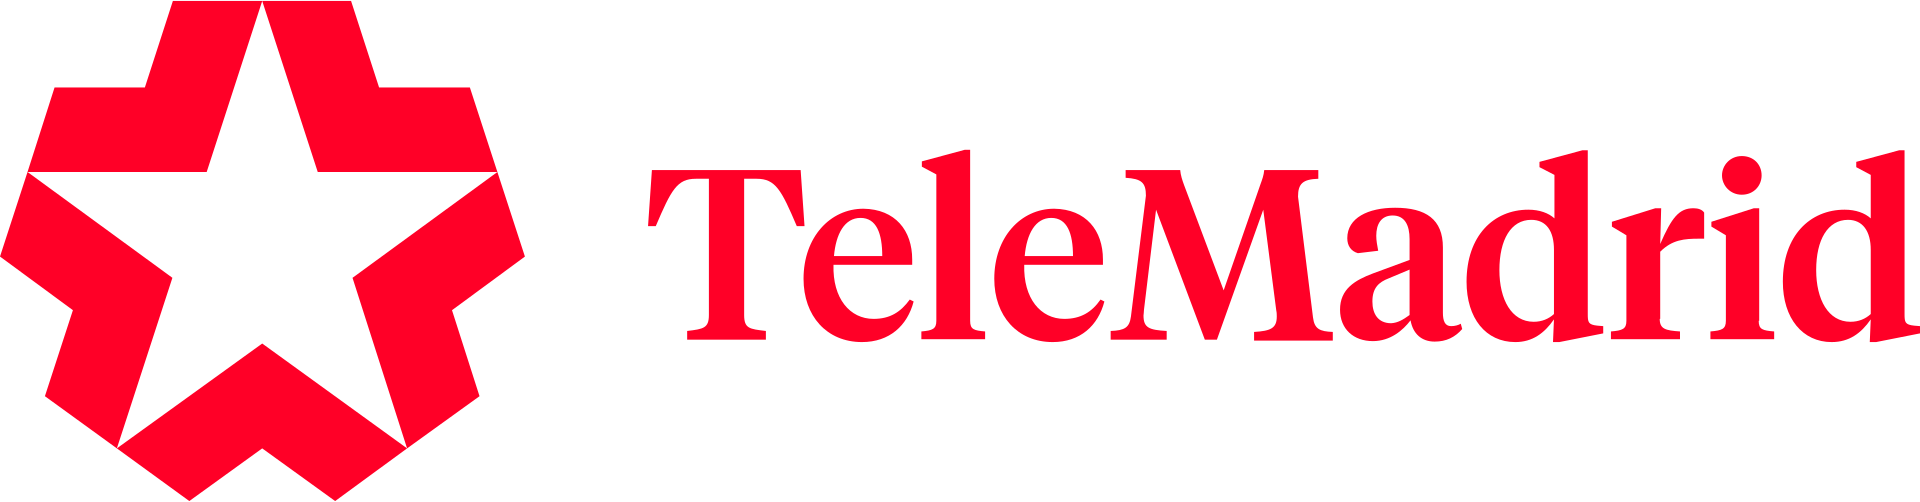 Telemadrid Logo